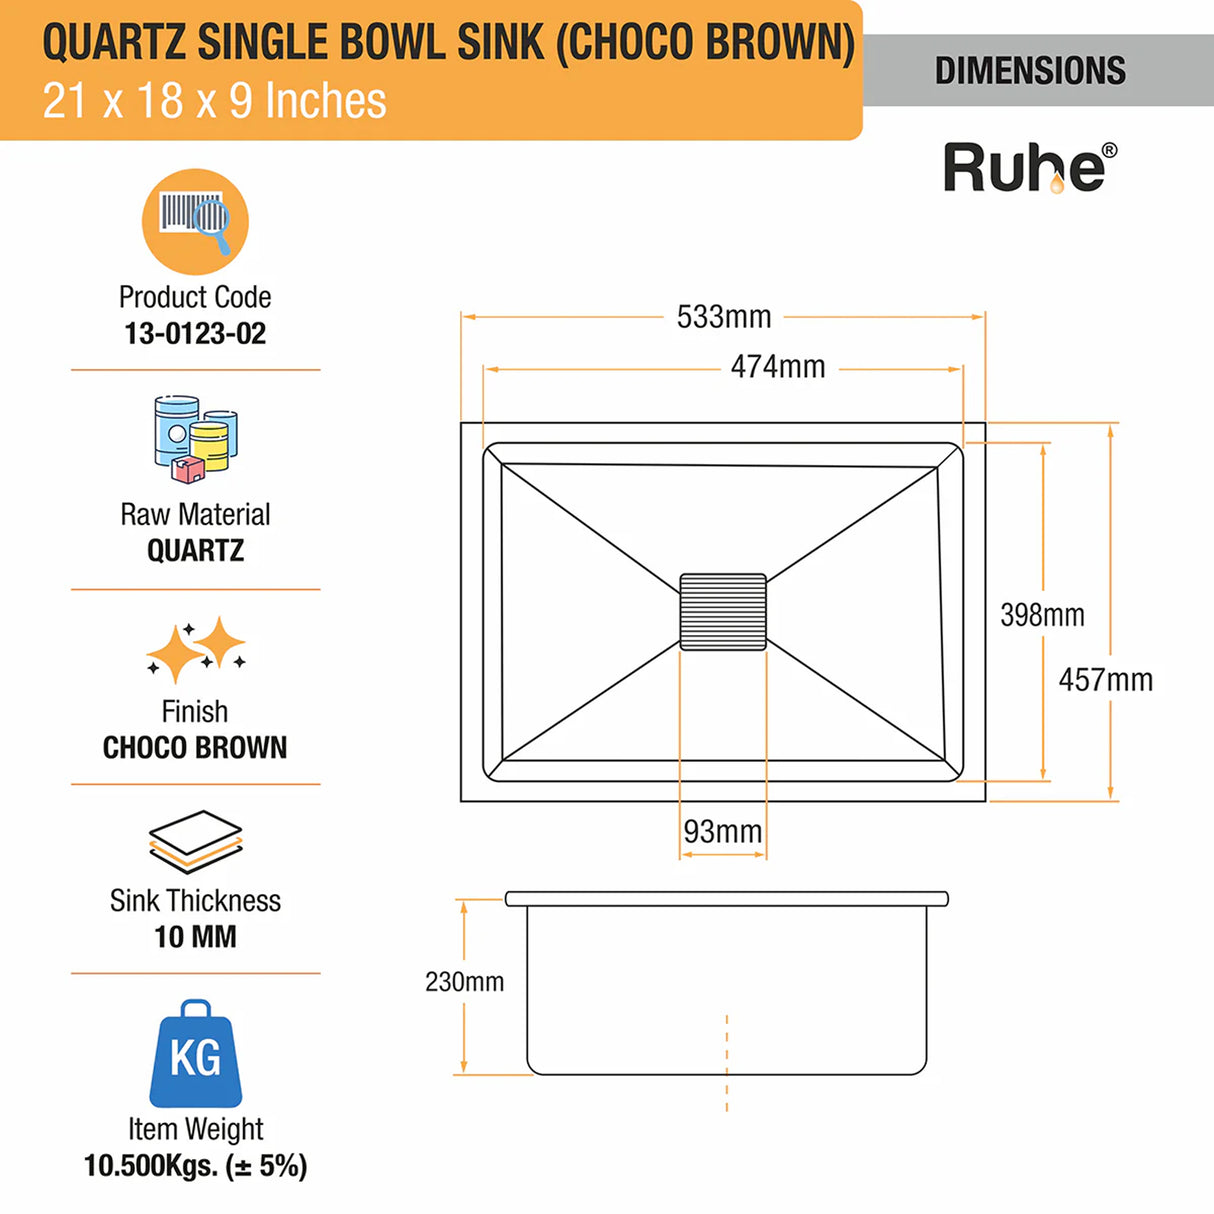 Quartz Single Bowl Kitchen Sink - Choco Brown (21 x 18 x 9 inches) - by Ruhe®